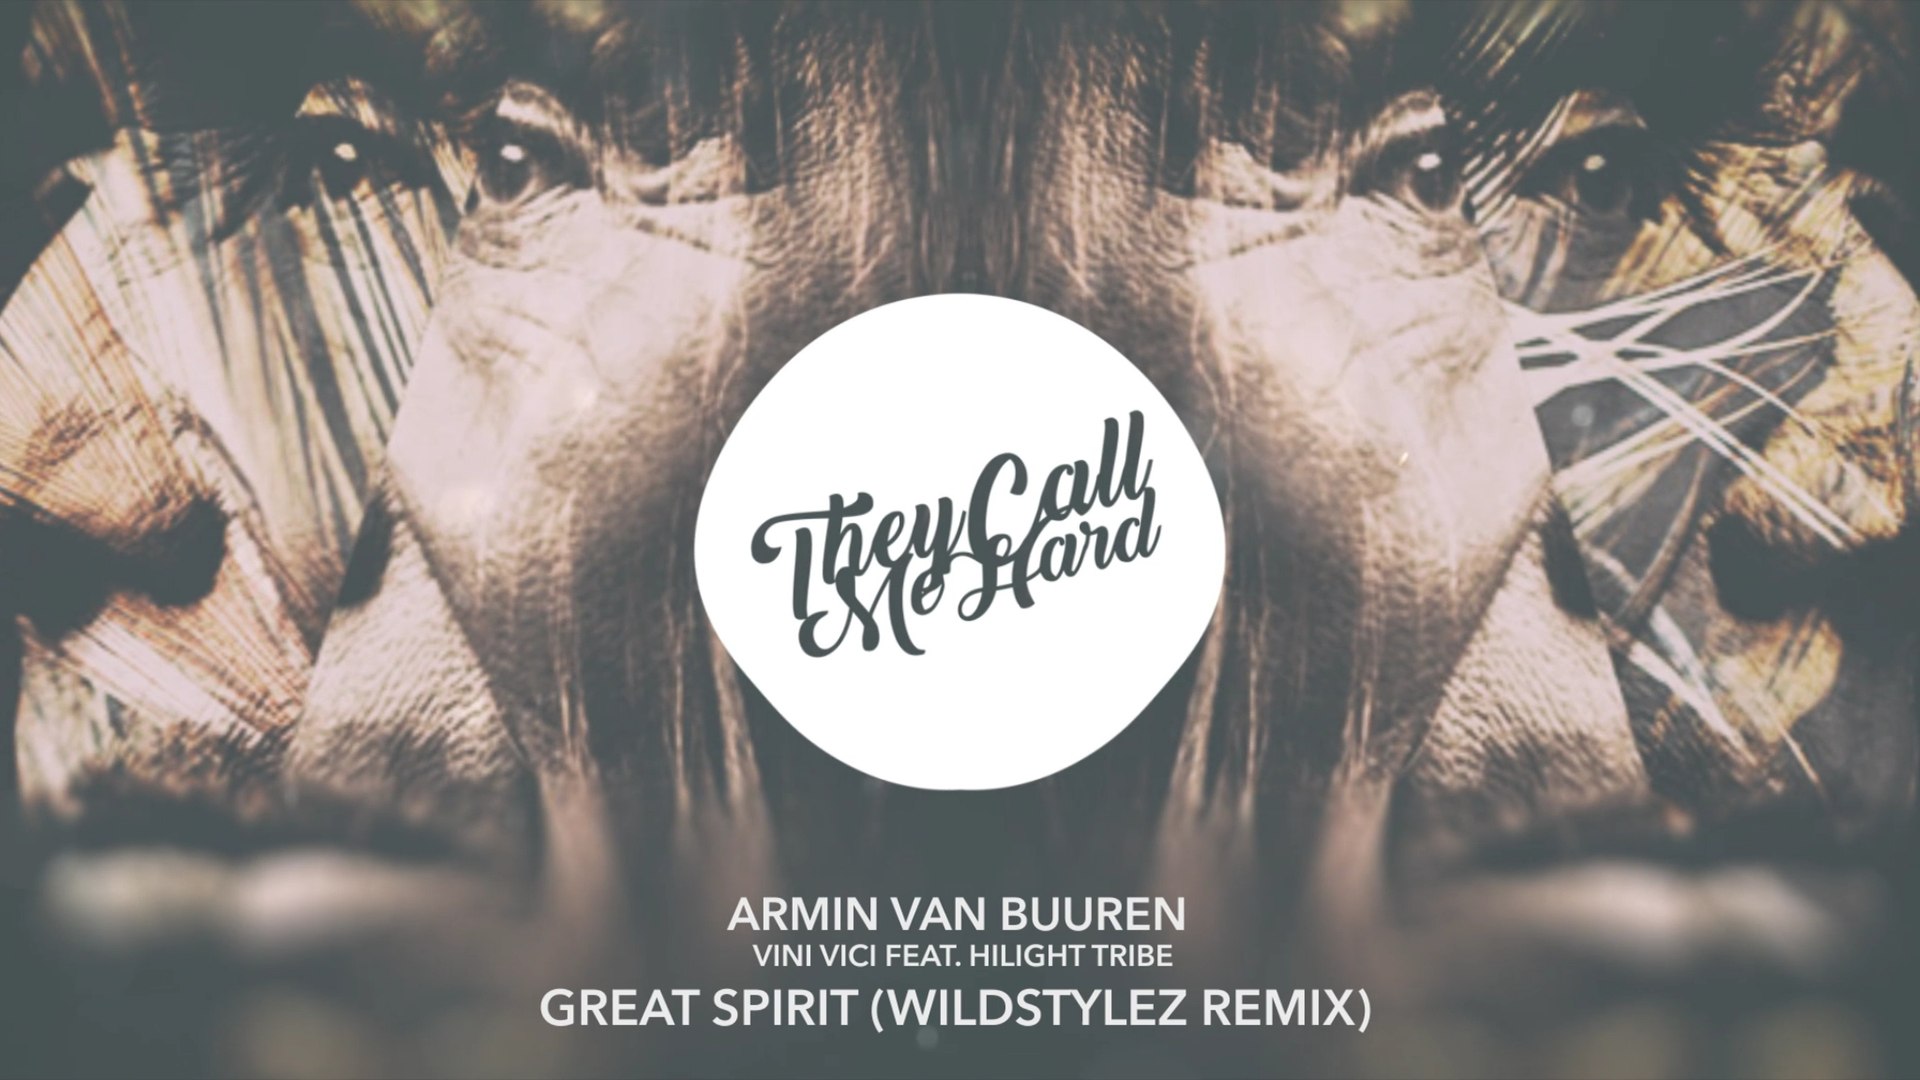 Armin van buuren vs vini vici great spirit wildstylez remix Armin Van Buuren Vs Vini Vici Feat Hilight Tribe Great Spirit Wildstylez Remix Video Dailymotion